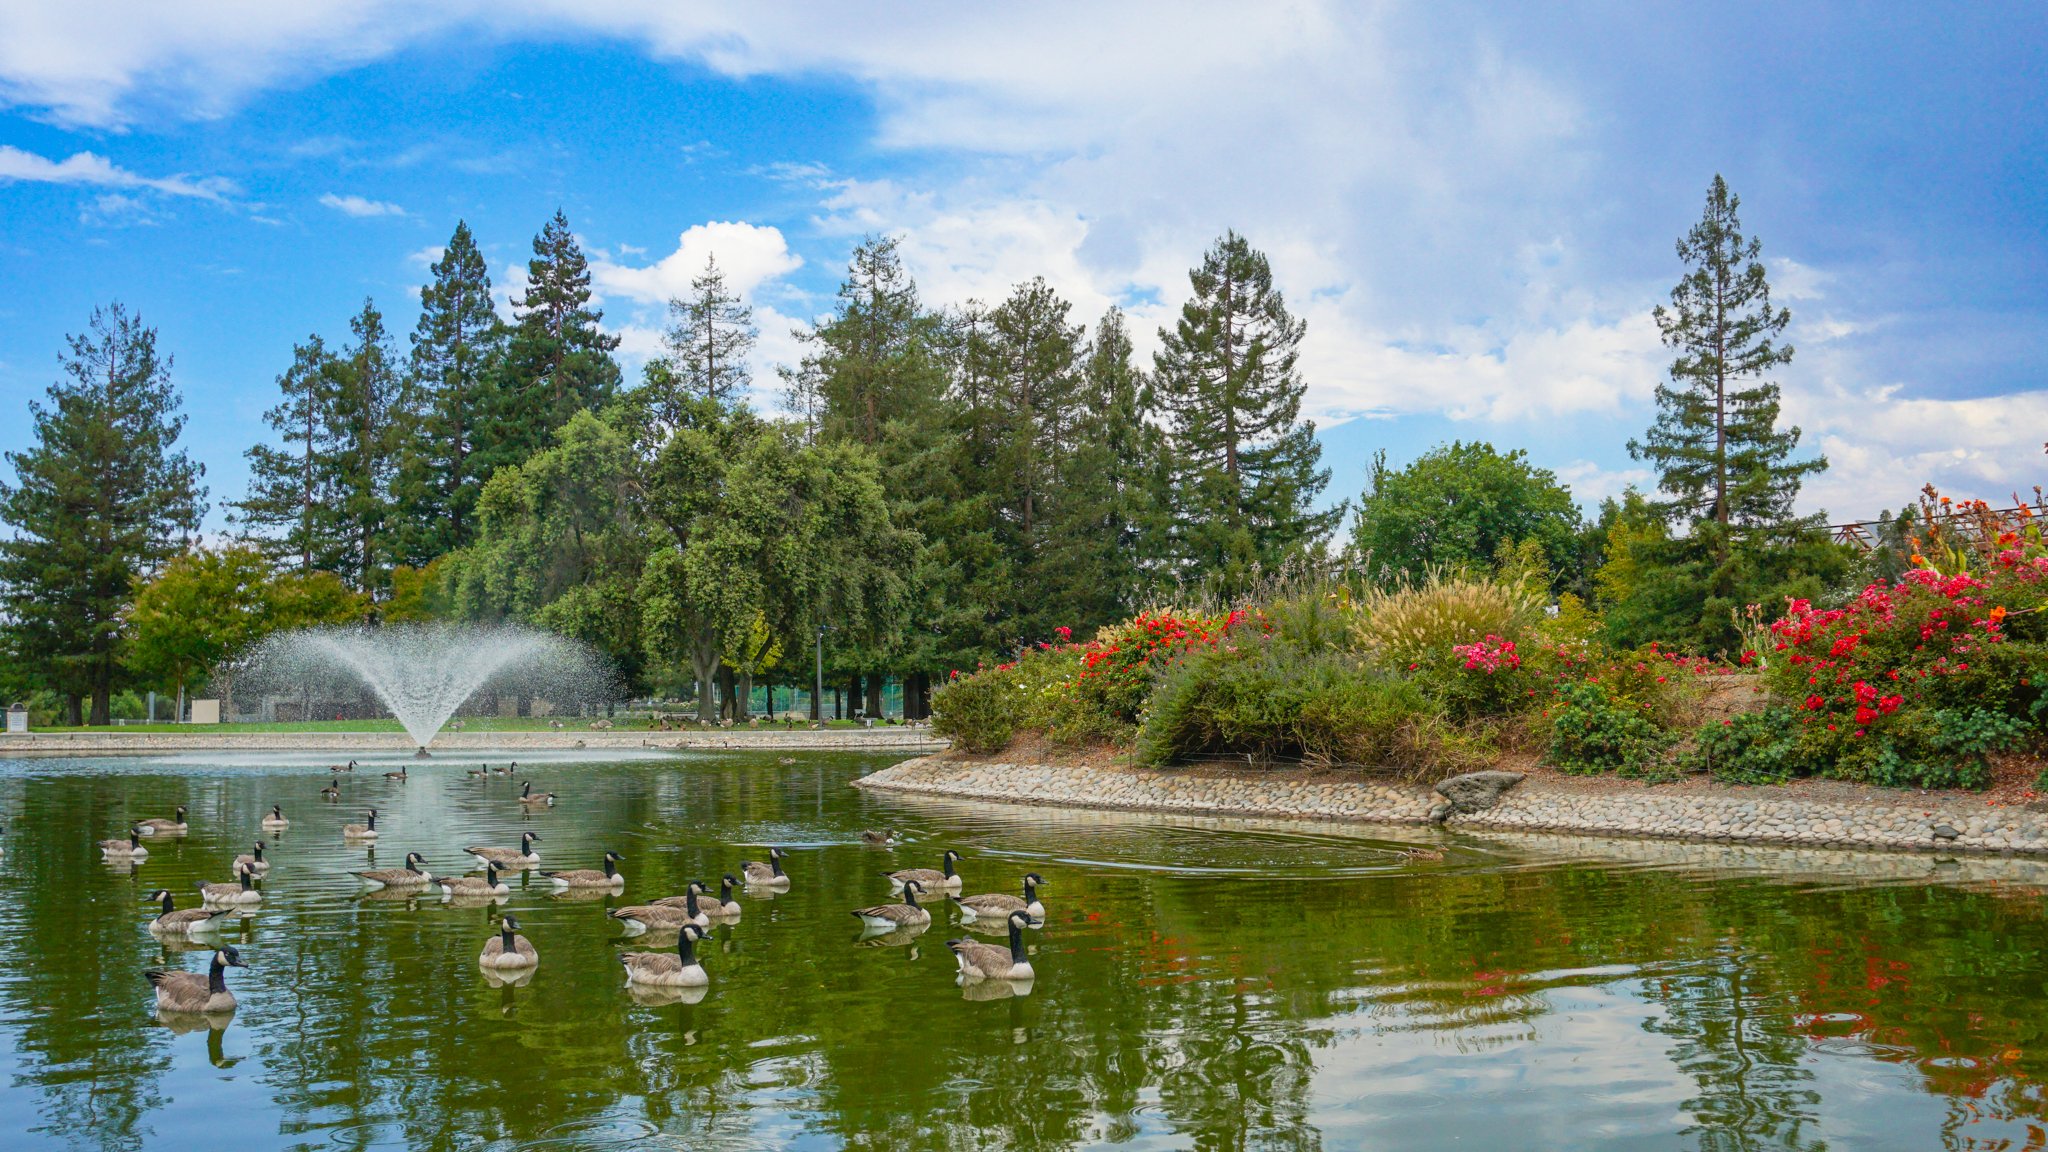   Parks and Recreation Director   City of Santa Clara, California   Learn More  